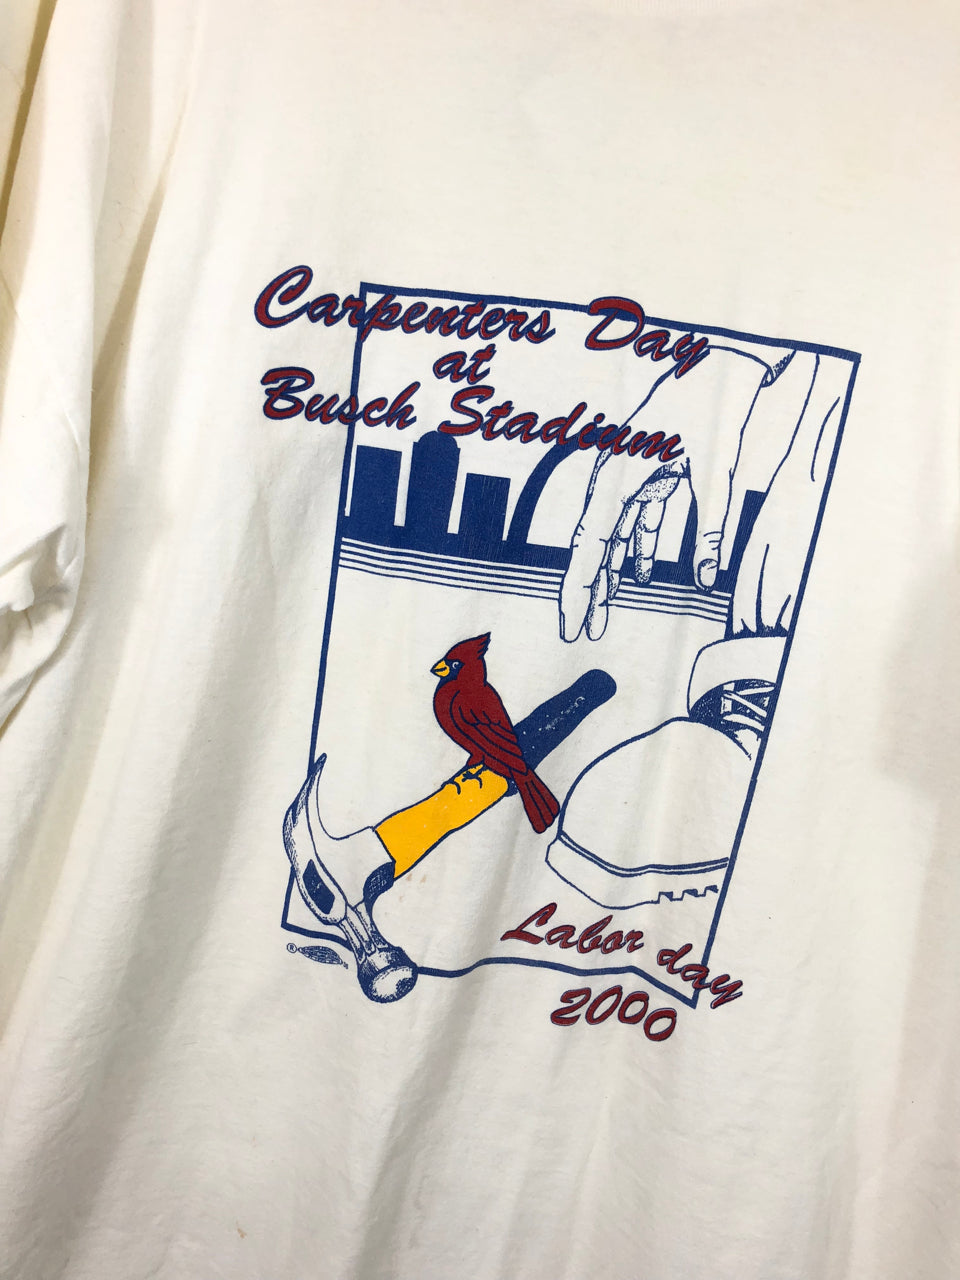 Carpenters Labor Day at Busch Stadium 2000 T-Shirt